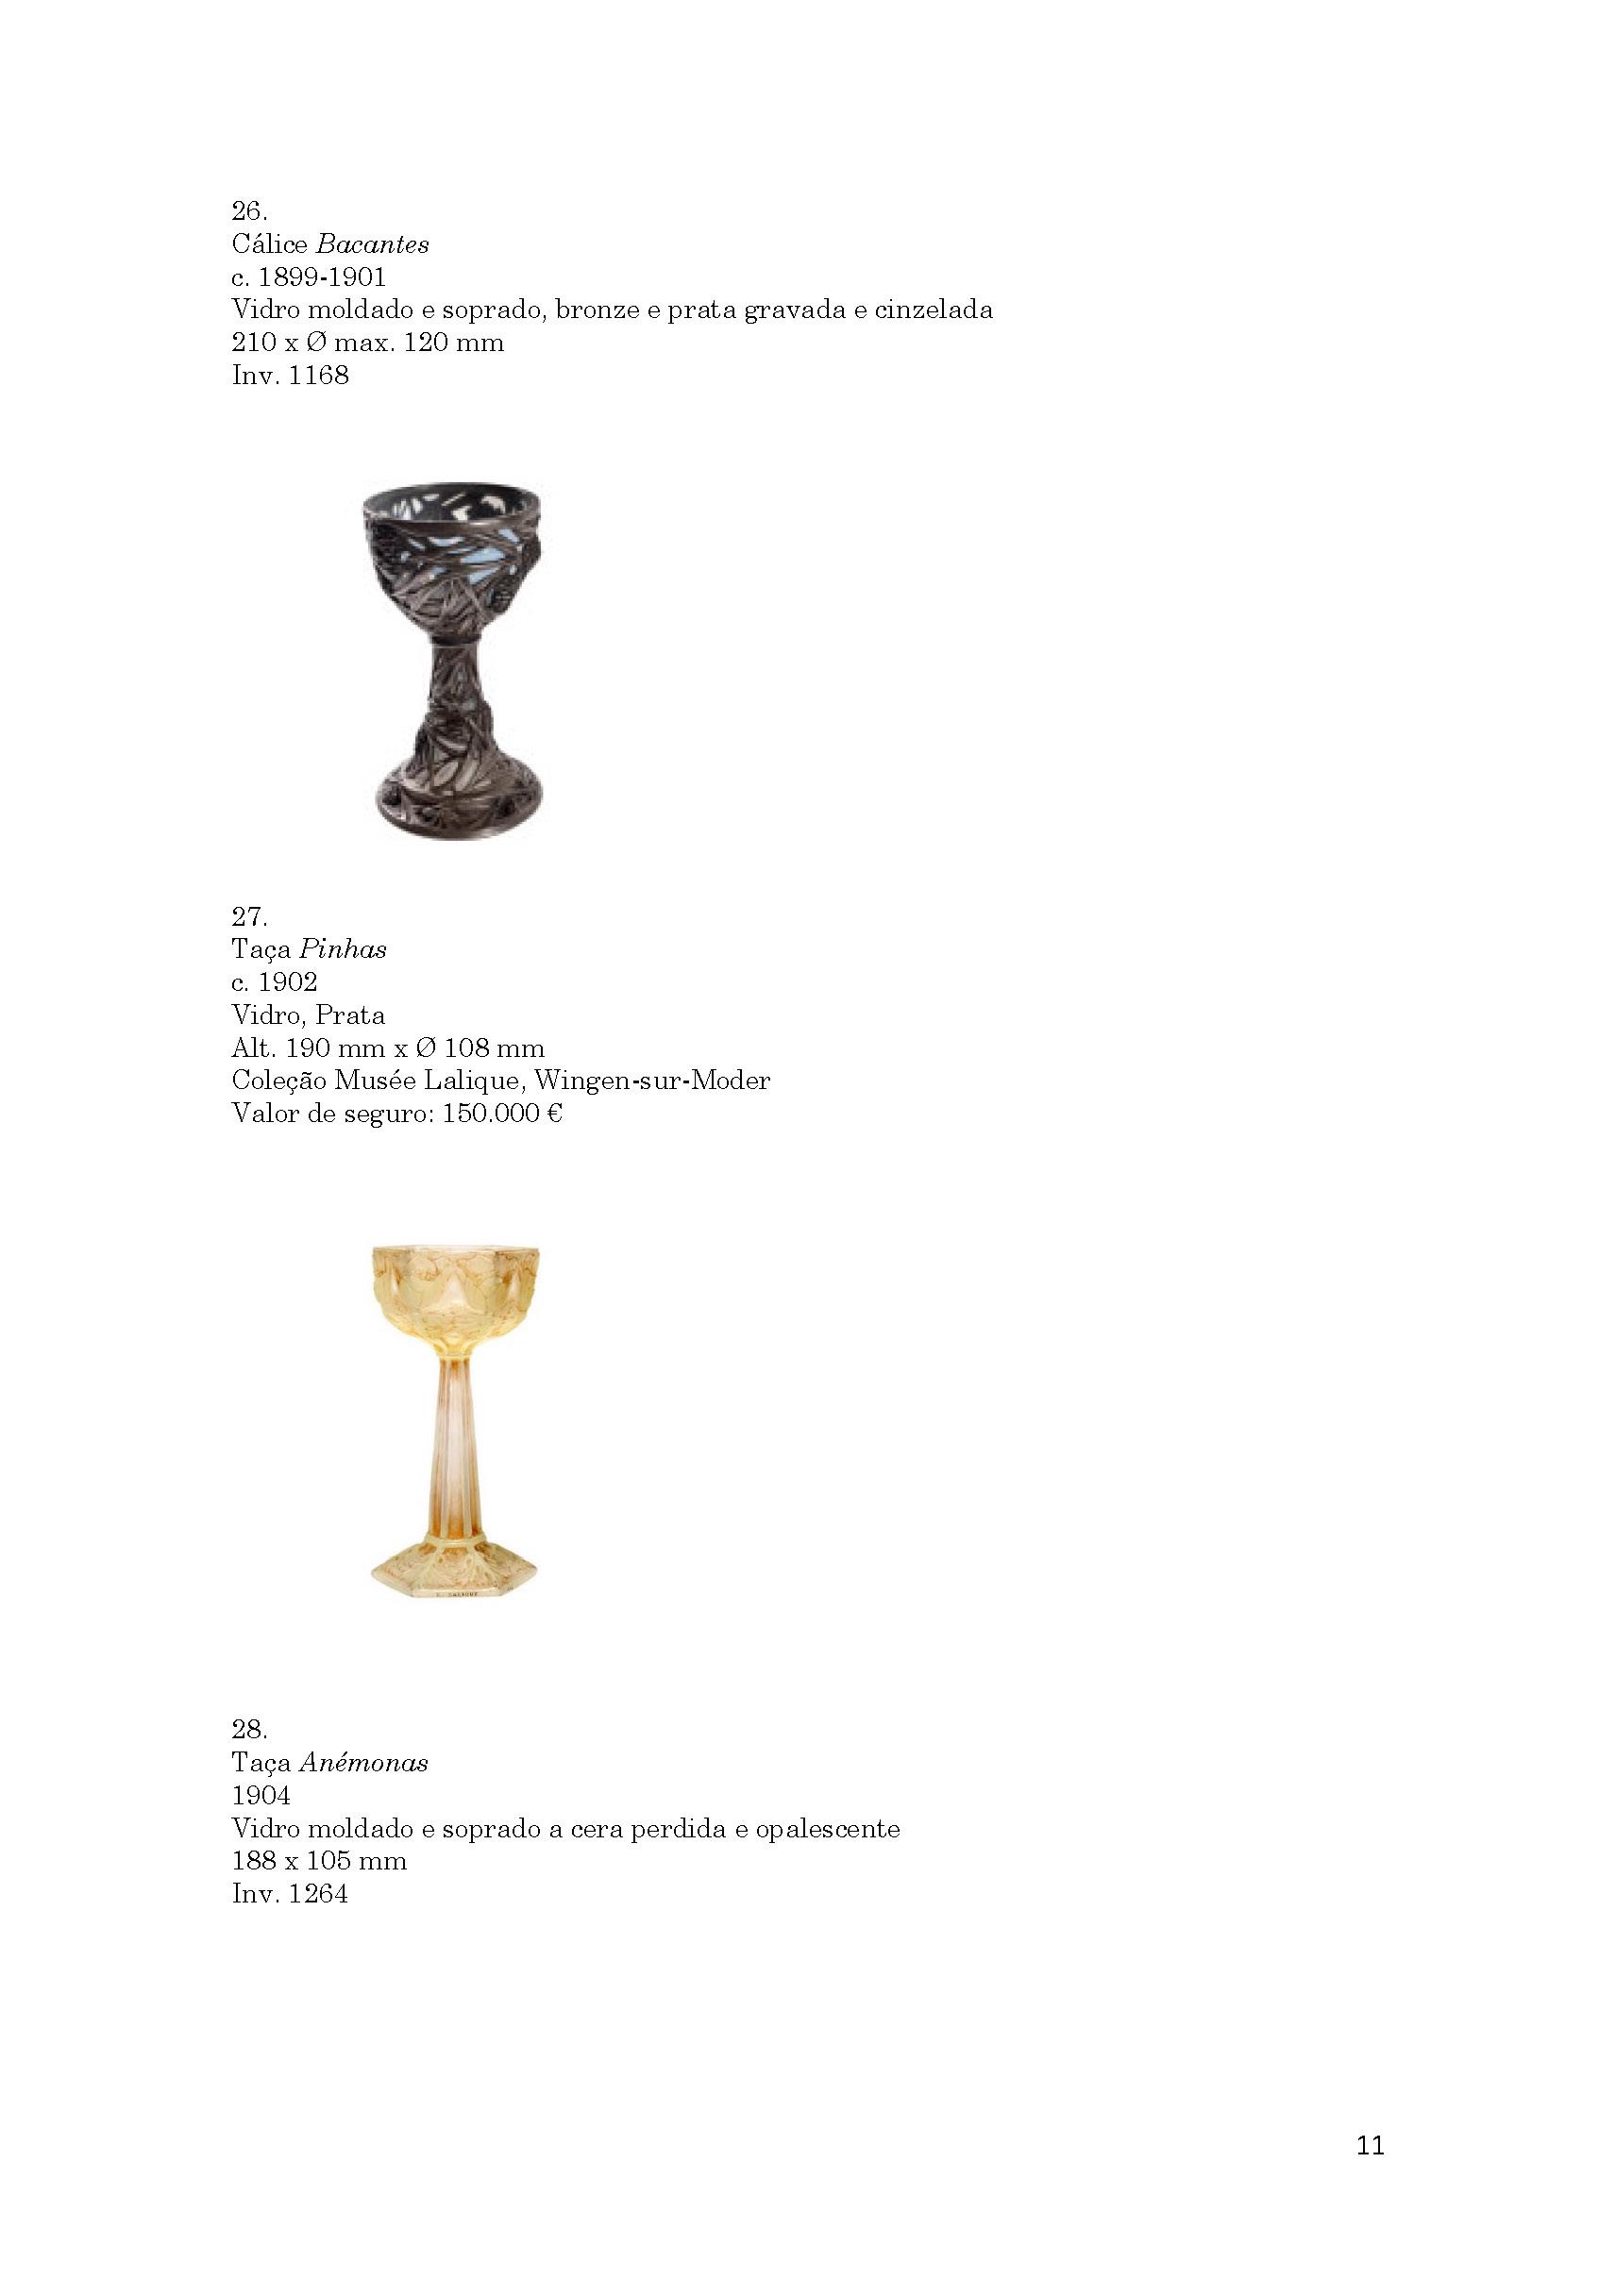 Lista_Vidros_Lalique_25.09.2020_1.11